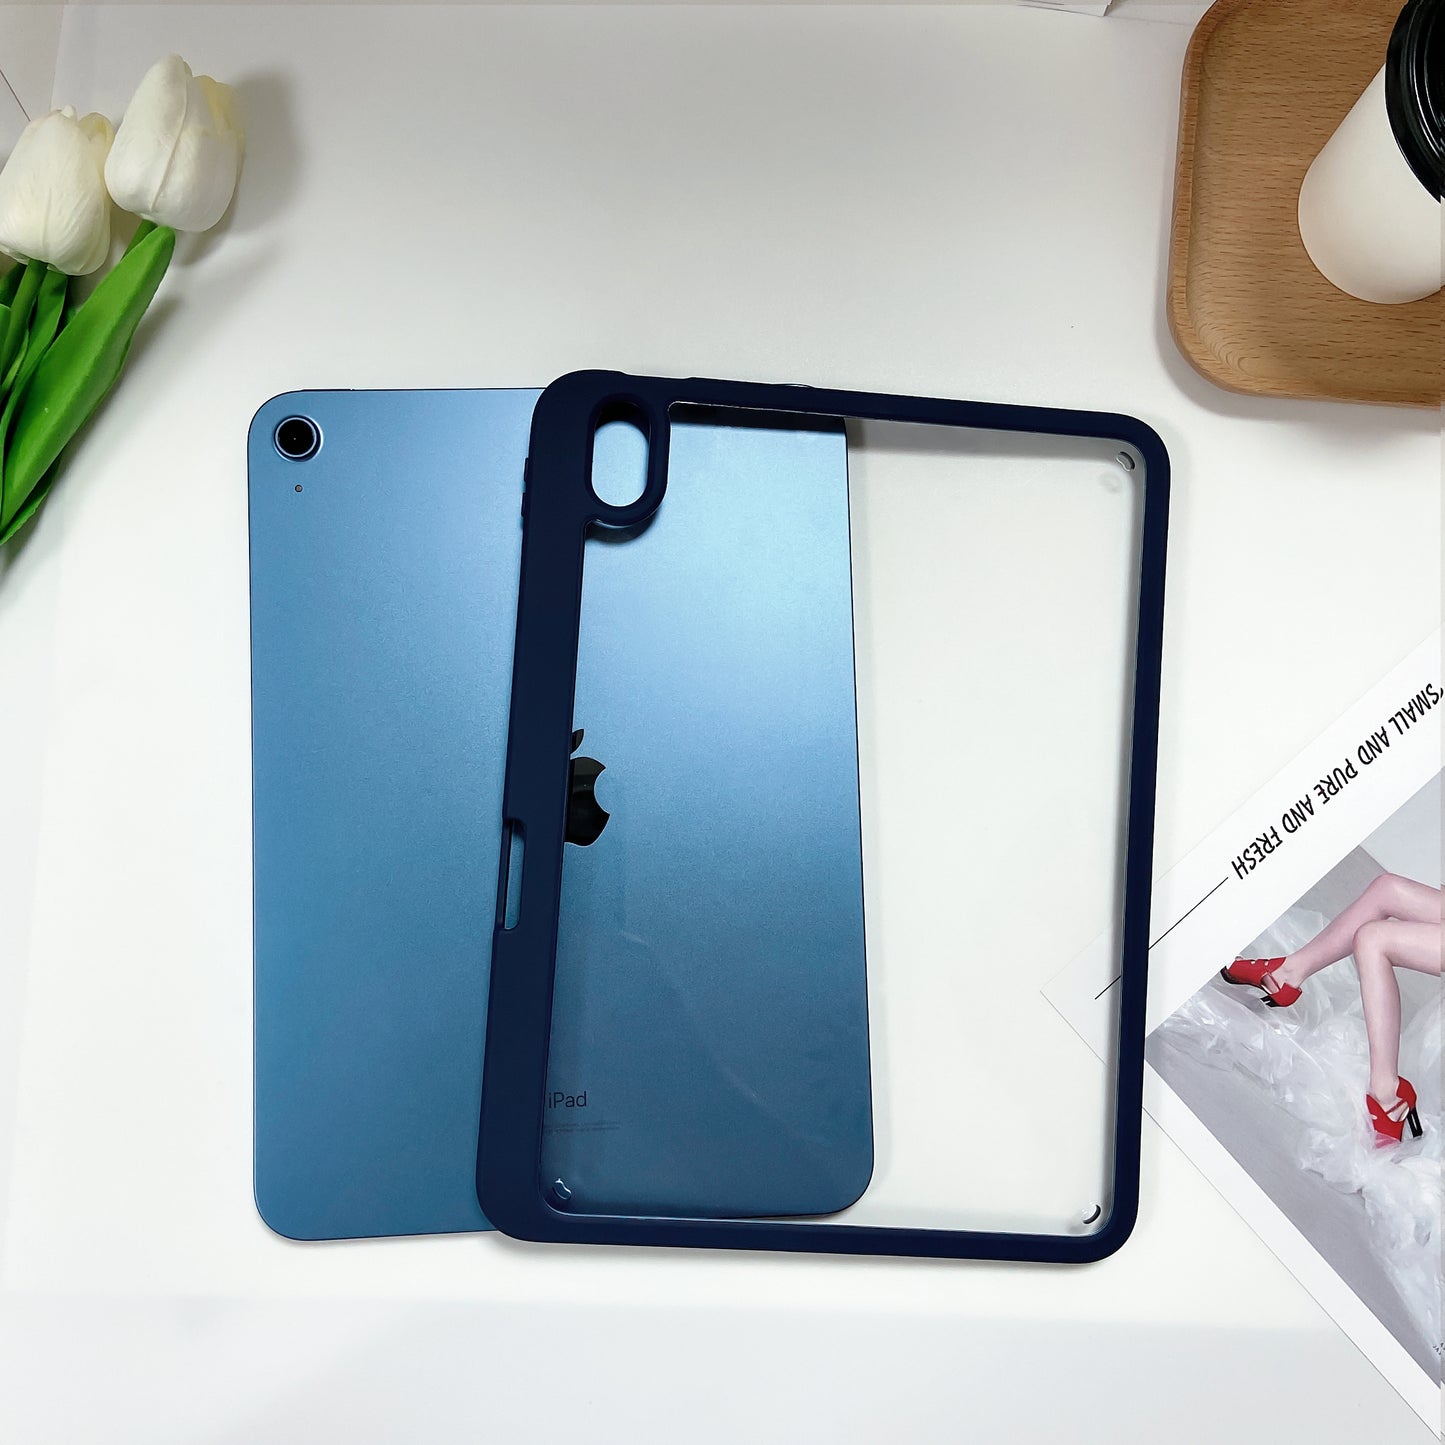 Acrylic iPad Case